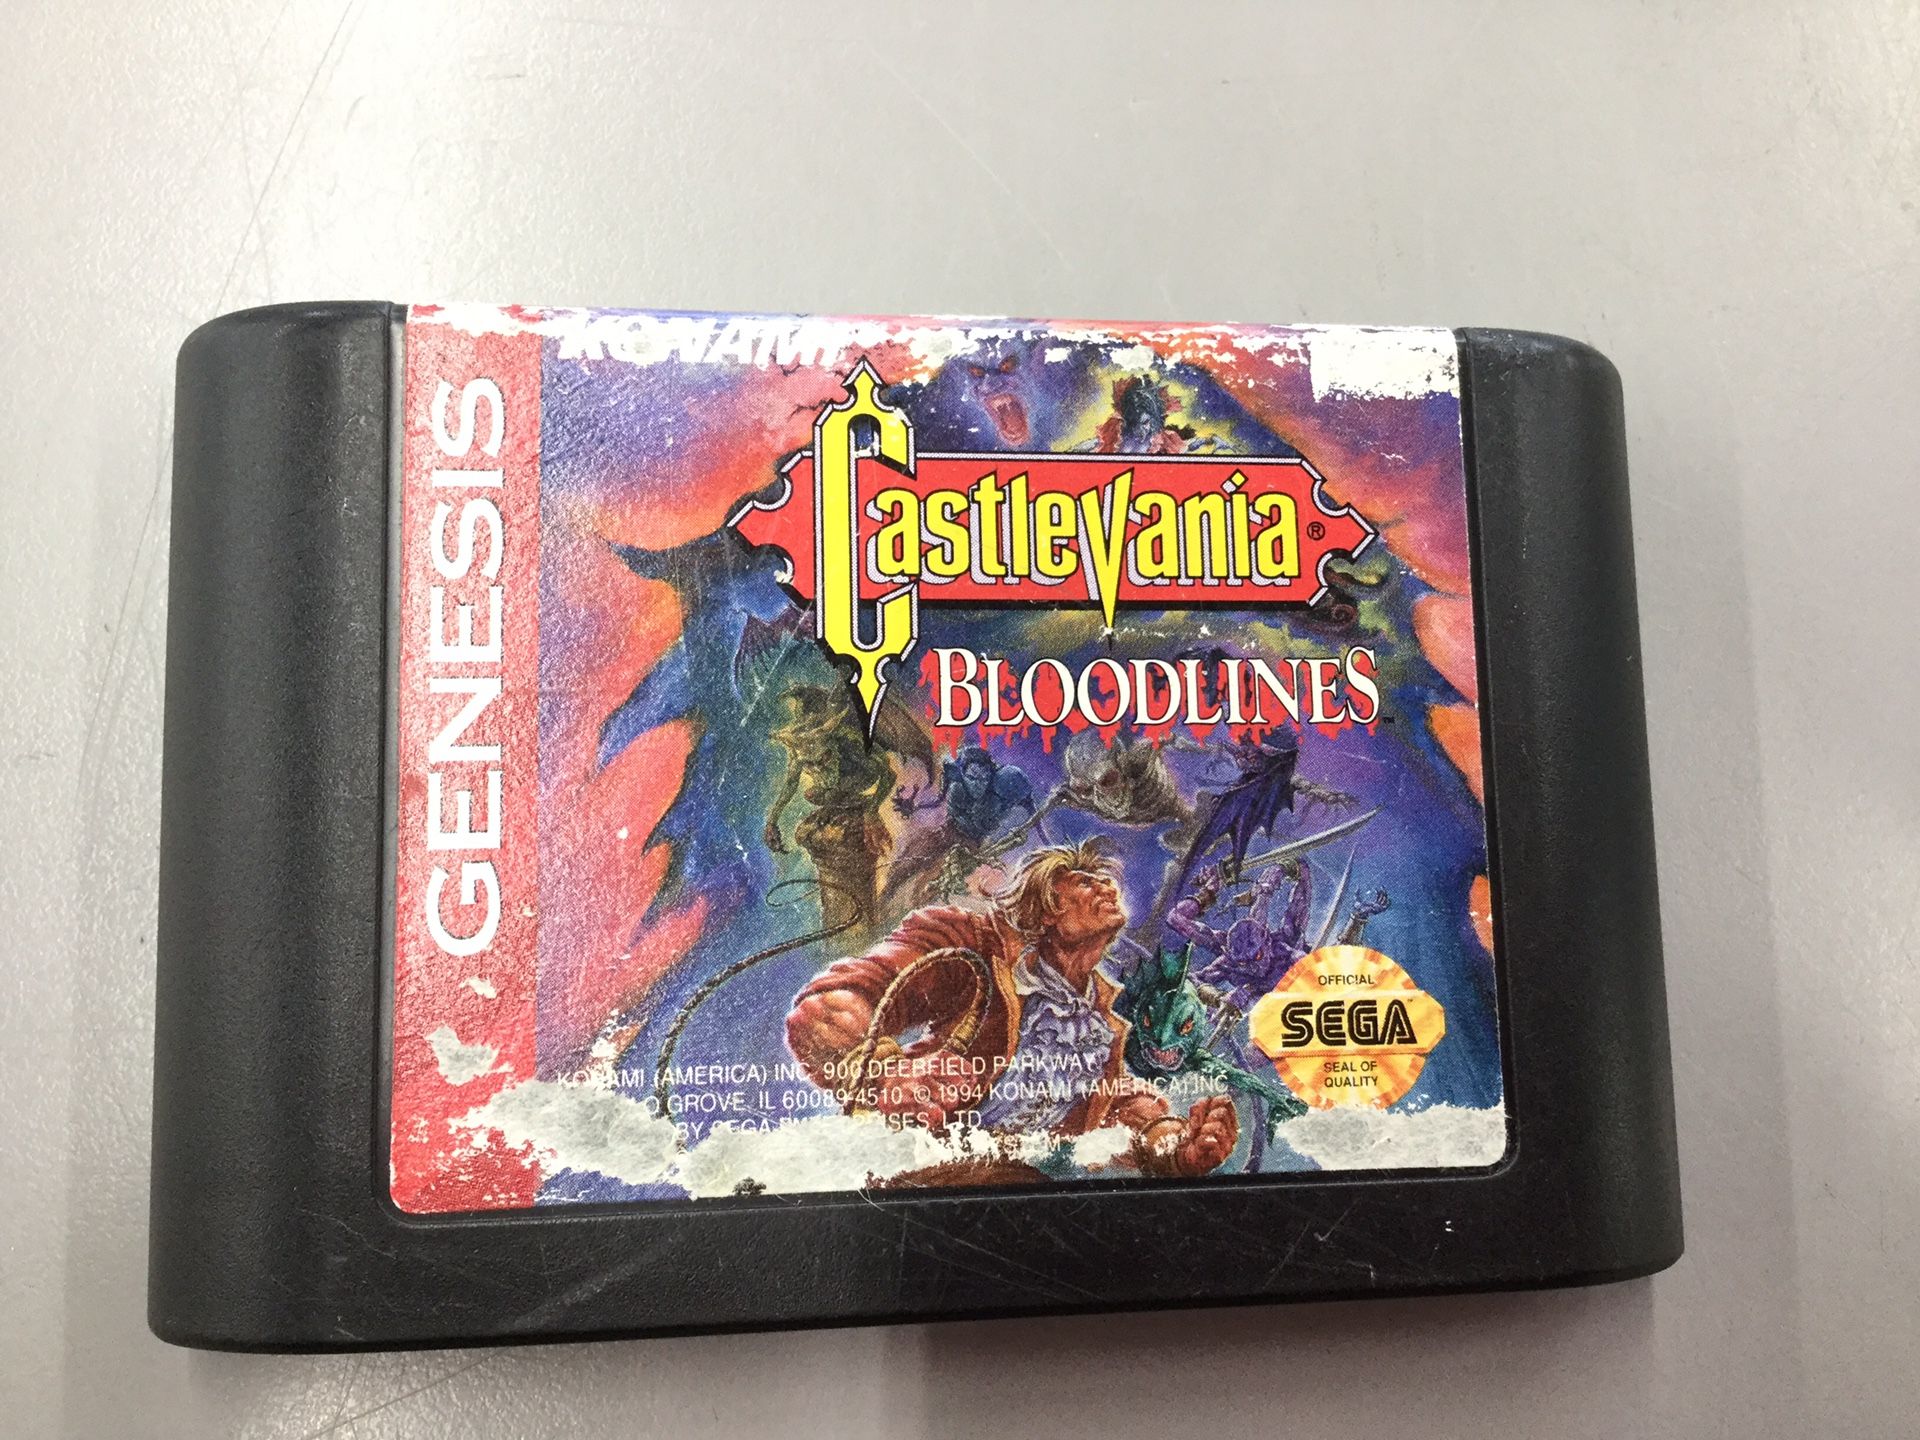 Sega Genesis Castlevania Bloodlines by Konami (Game Cartridge Only)